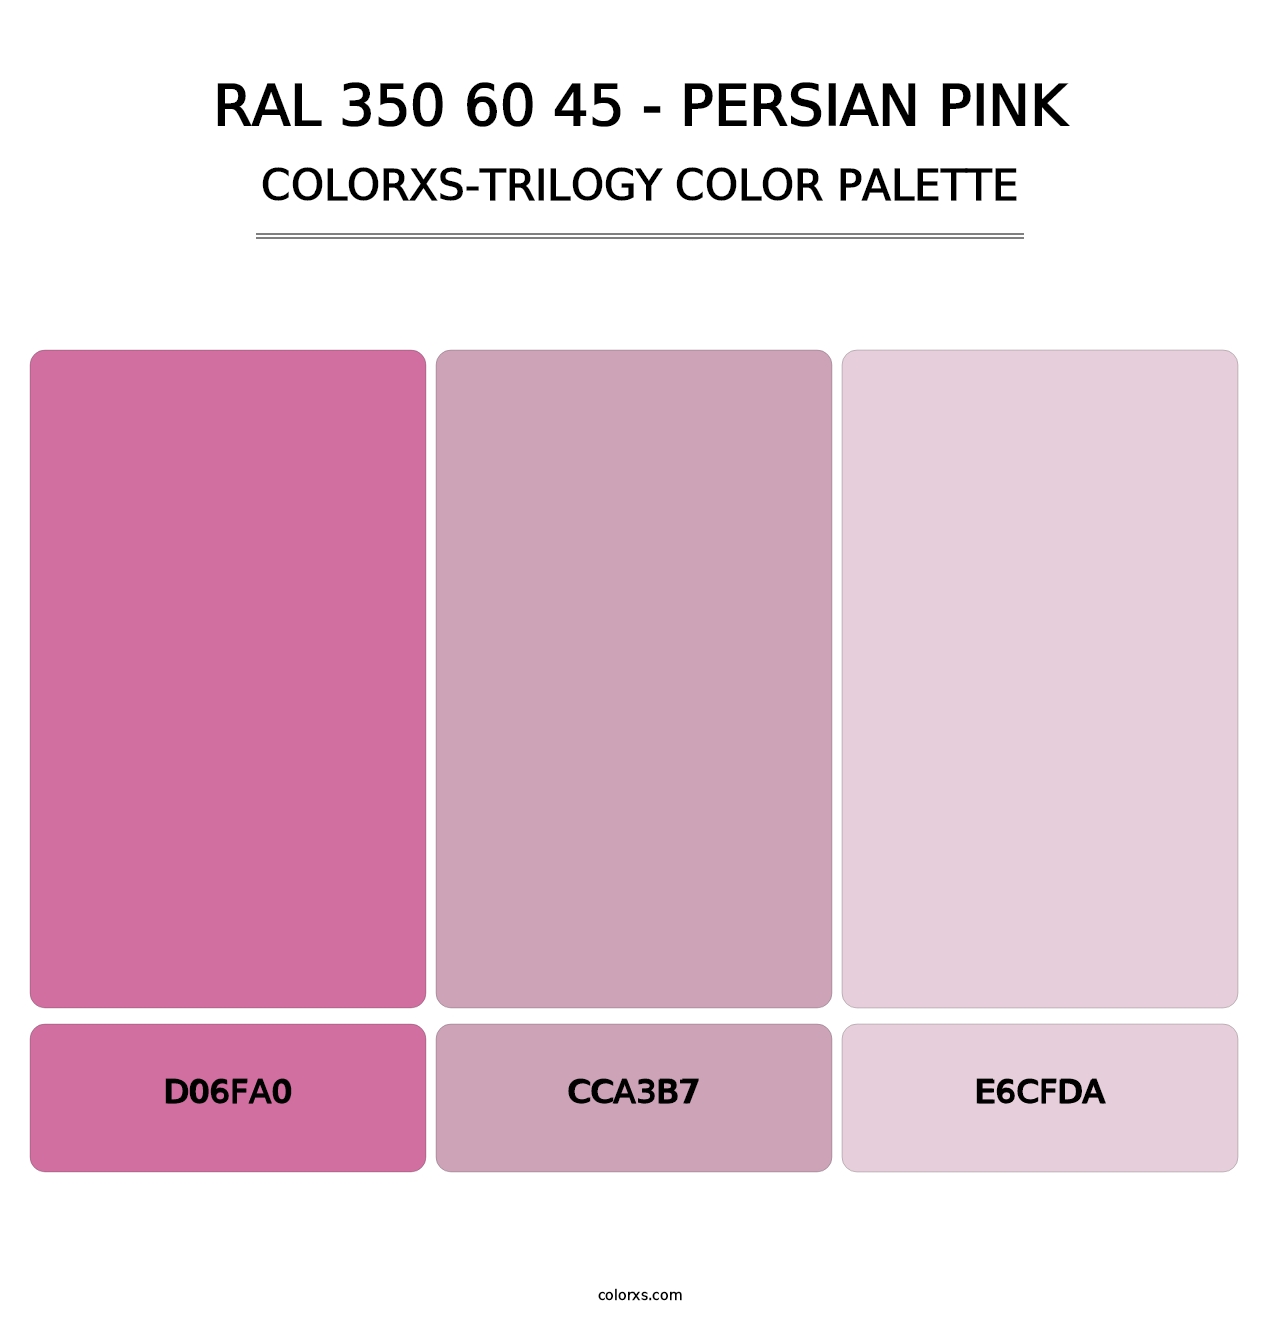 RAL 350 60 45 - Persian Pink - Colorxs Trilogy Palette